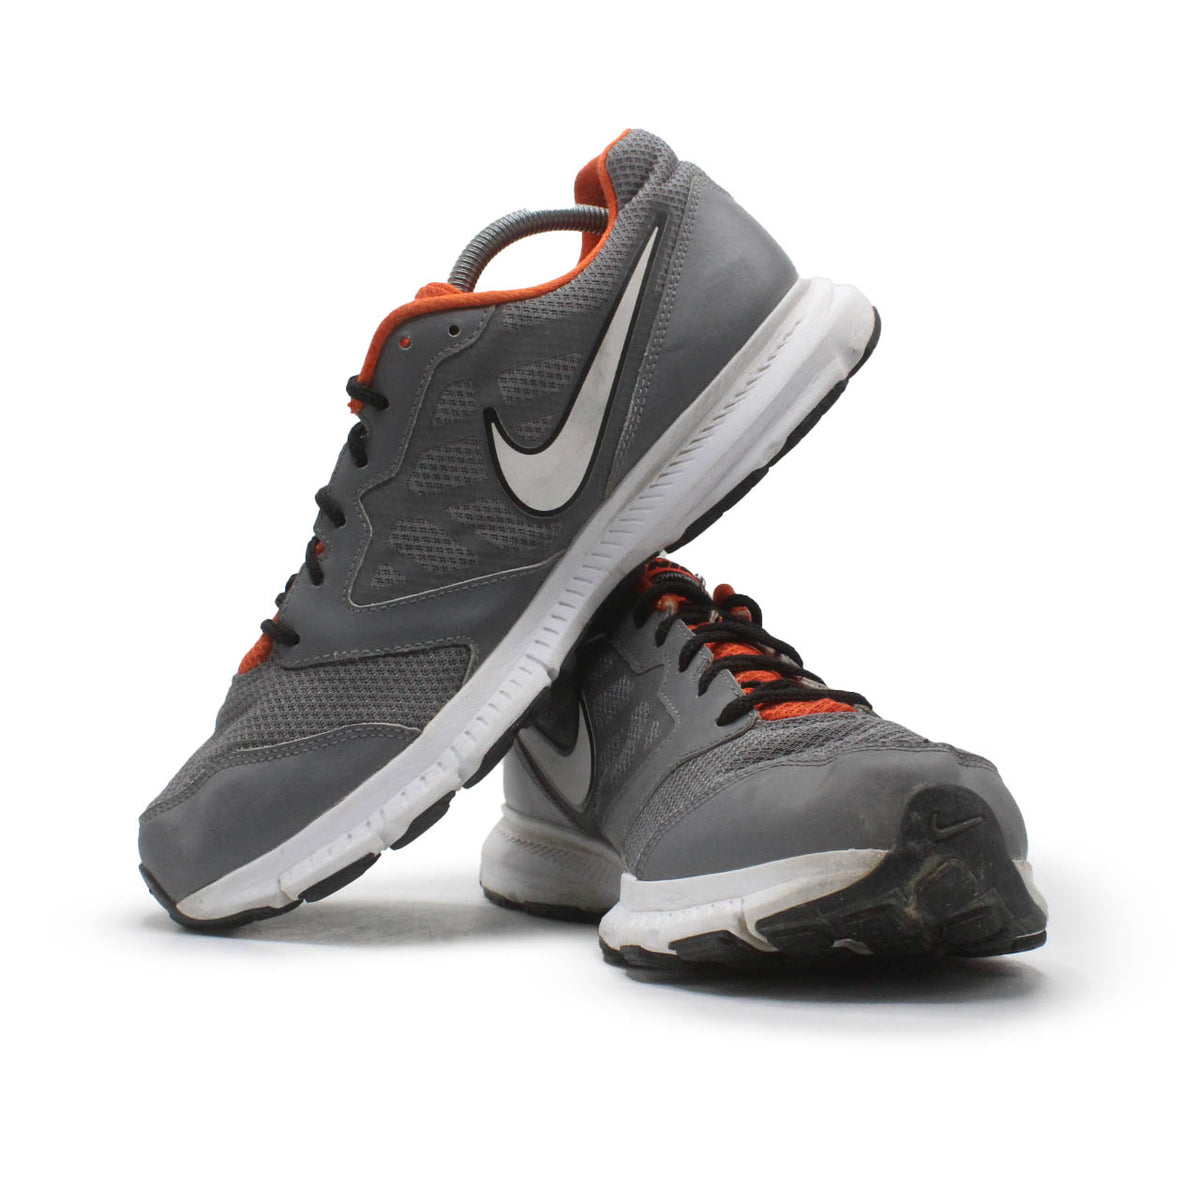 Buy Nike Men's Downshifter 6 Running Shoe Cool Grey/Team  Orange/White/Platinum Size 10 M US at Amazon.in